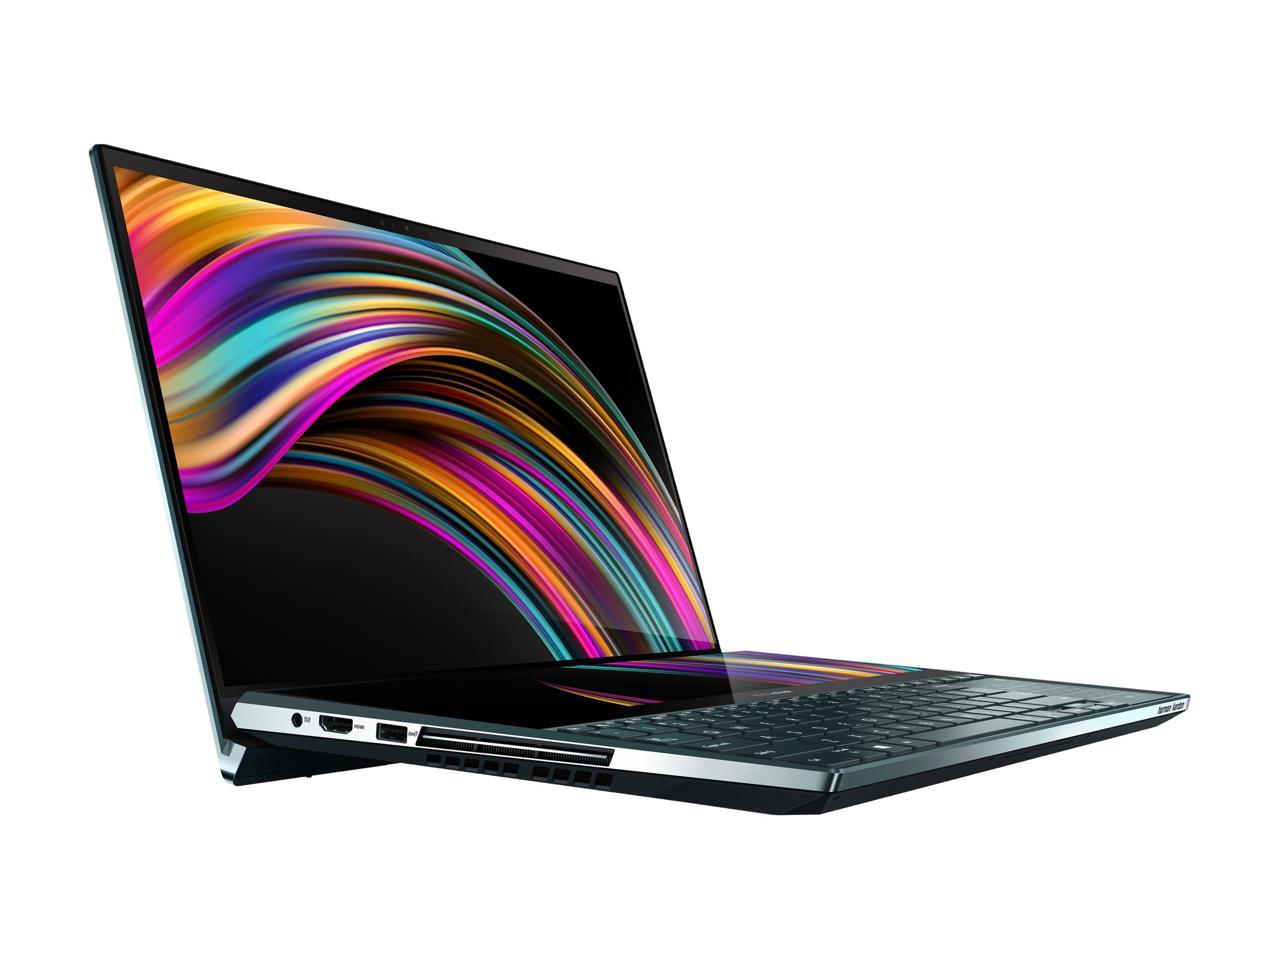 ASUS UX581GV-XB74T 15.6" 4K/UHD Laptop Intel Core i7 9th Gen 9750H (2.